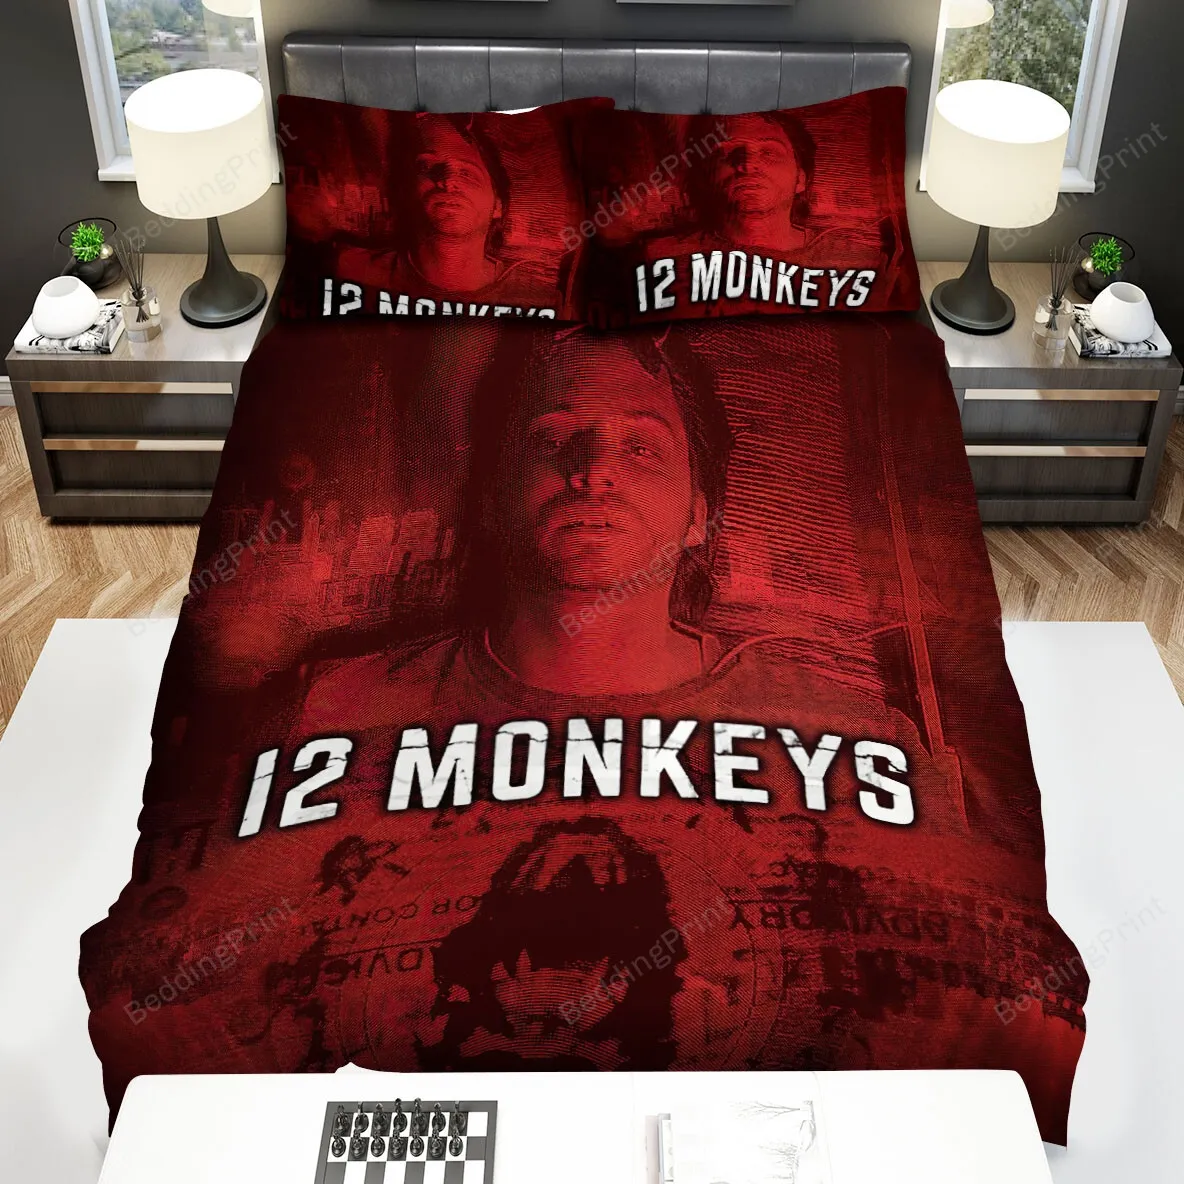 12 Monkeys (20152018) Red Poster Movie Poster Bed Sheets Spread Comforter Duvet Cover Bedding Sets